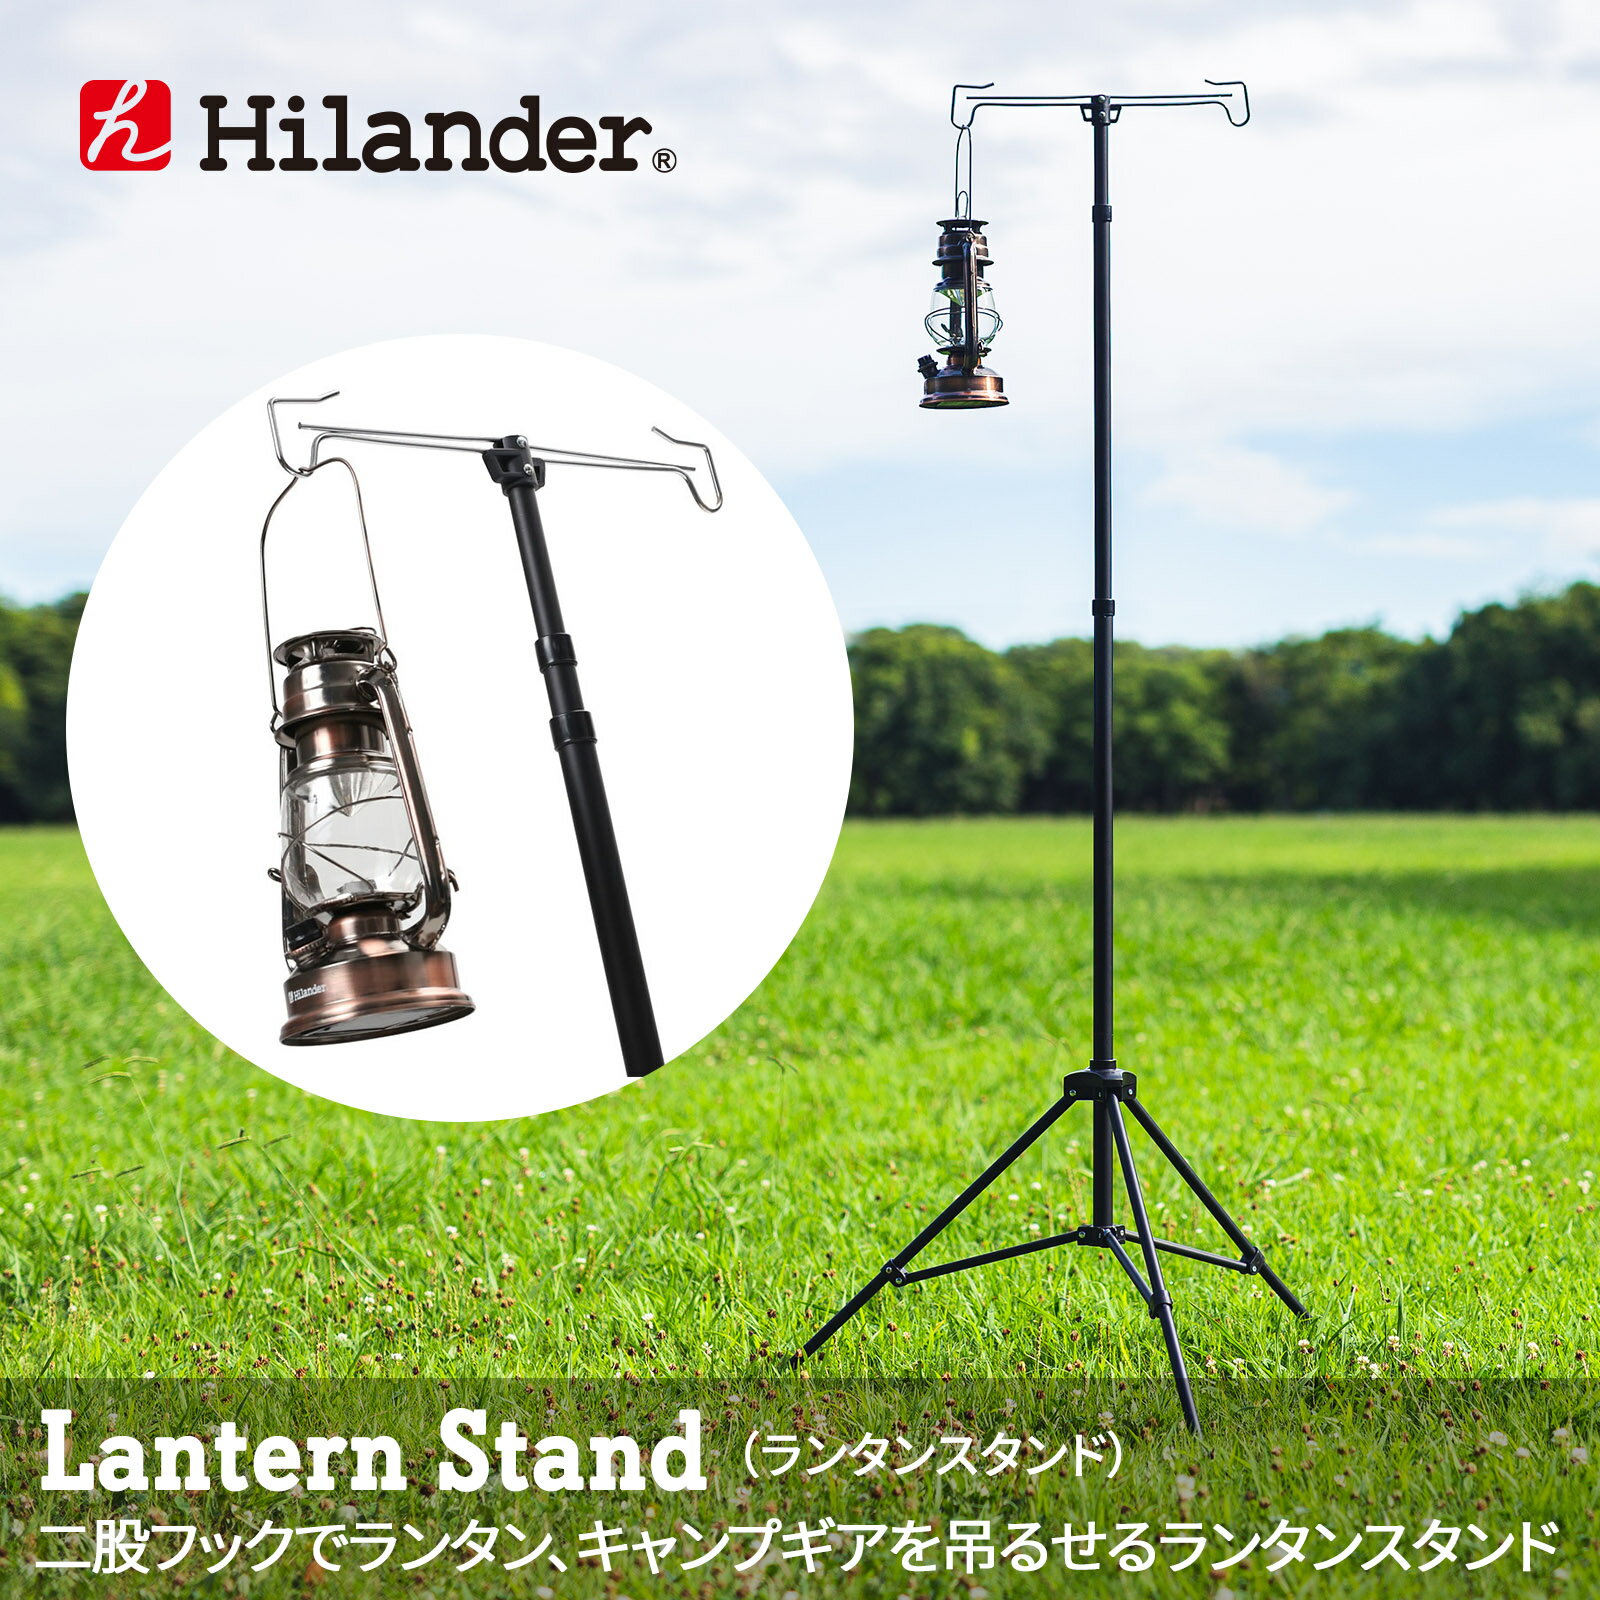 Hilander(ハイランダー) ランタンスタンド ブラック HCA0214 価格情報 - キャンプ沼で最安値をチェック！